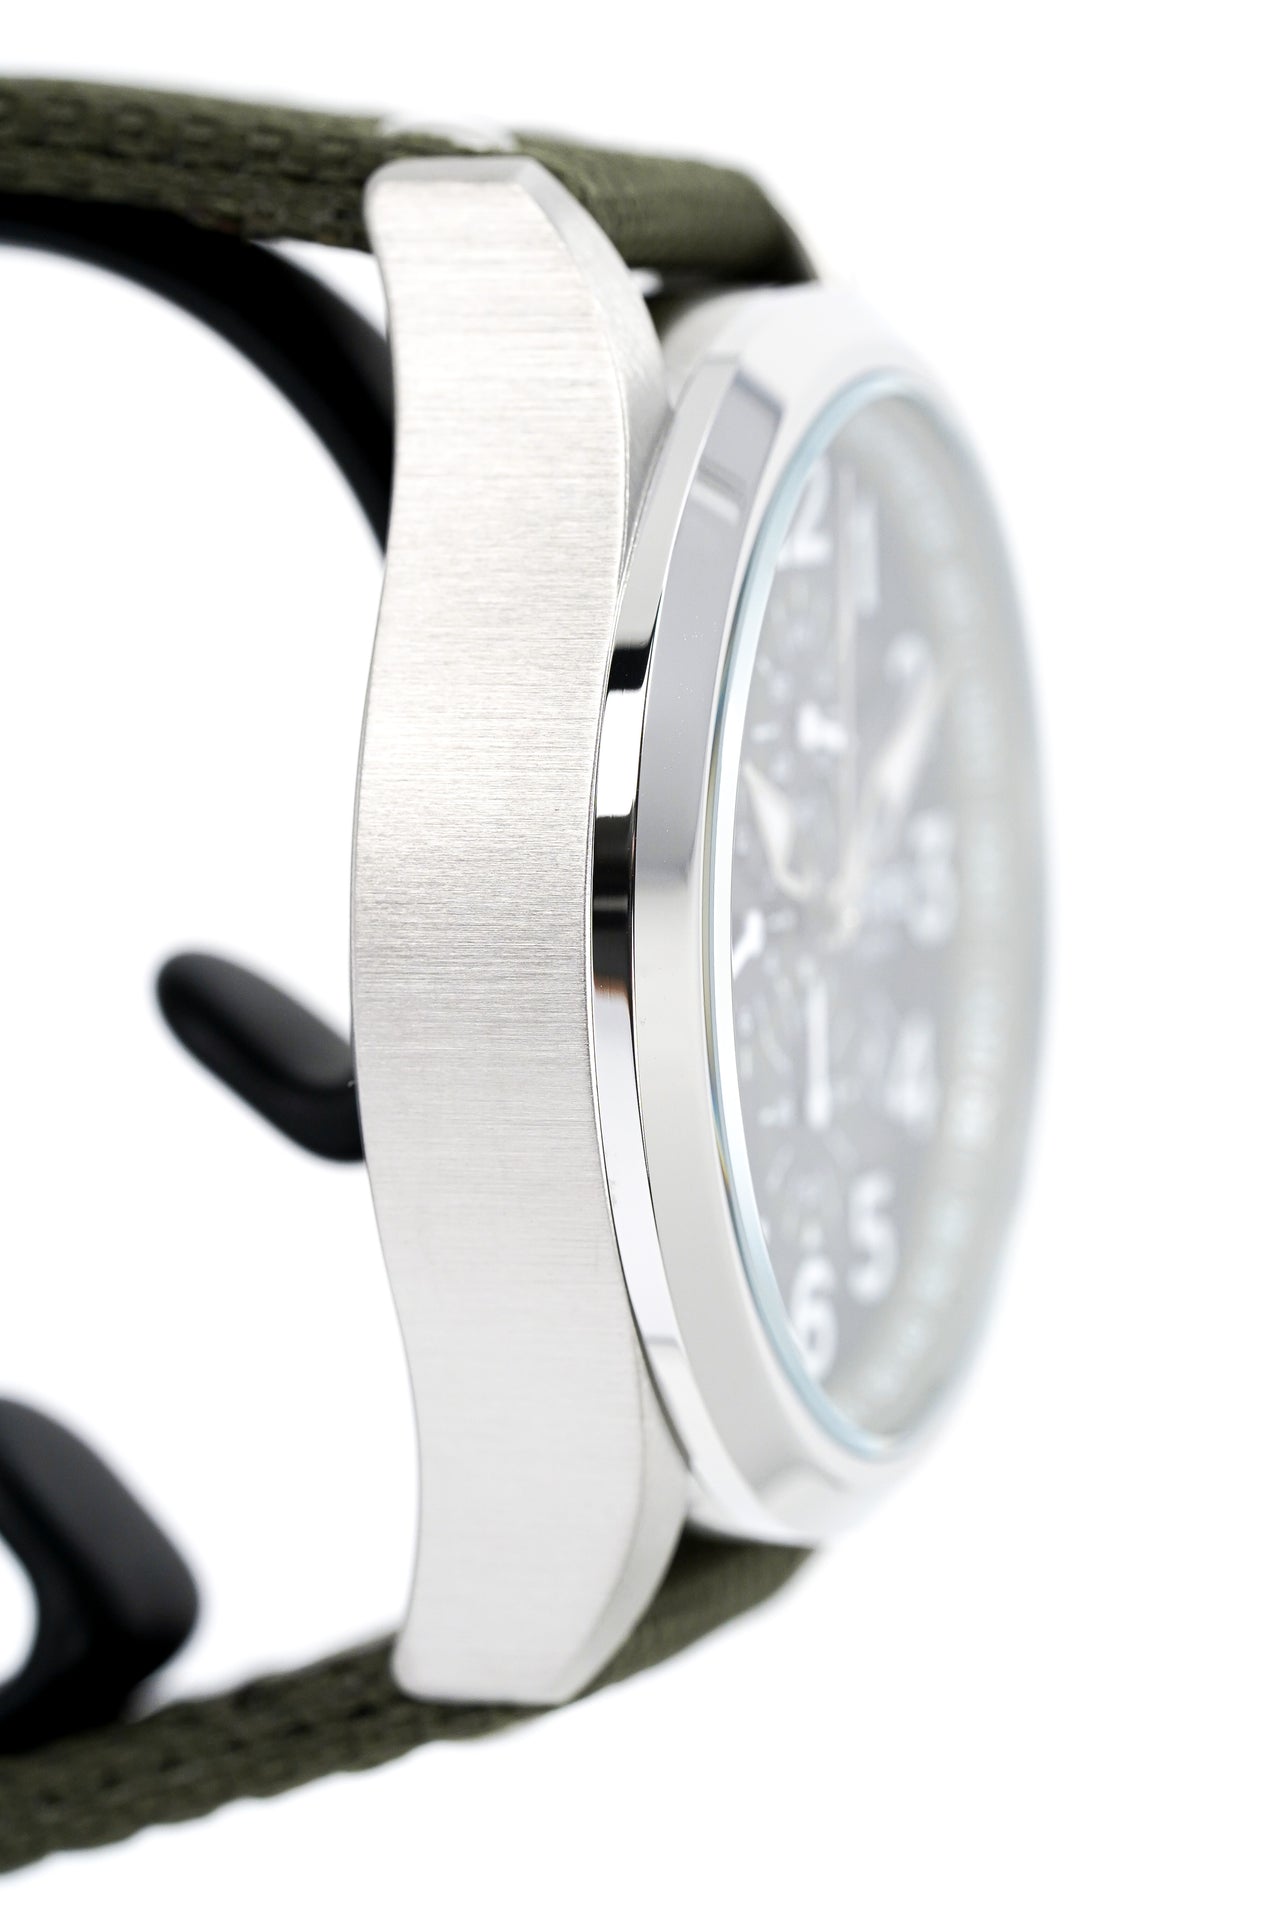 TW Steel Watch Chronograph Volante Khaki VS23